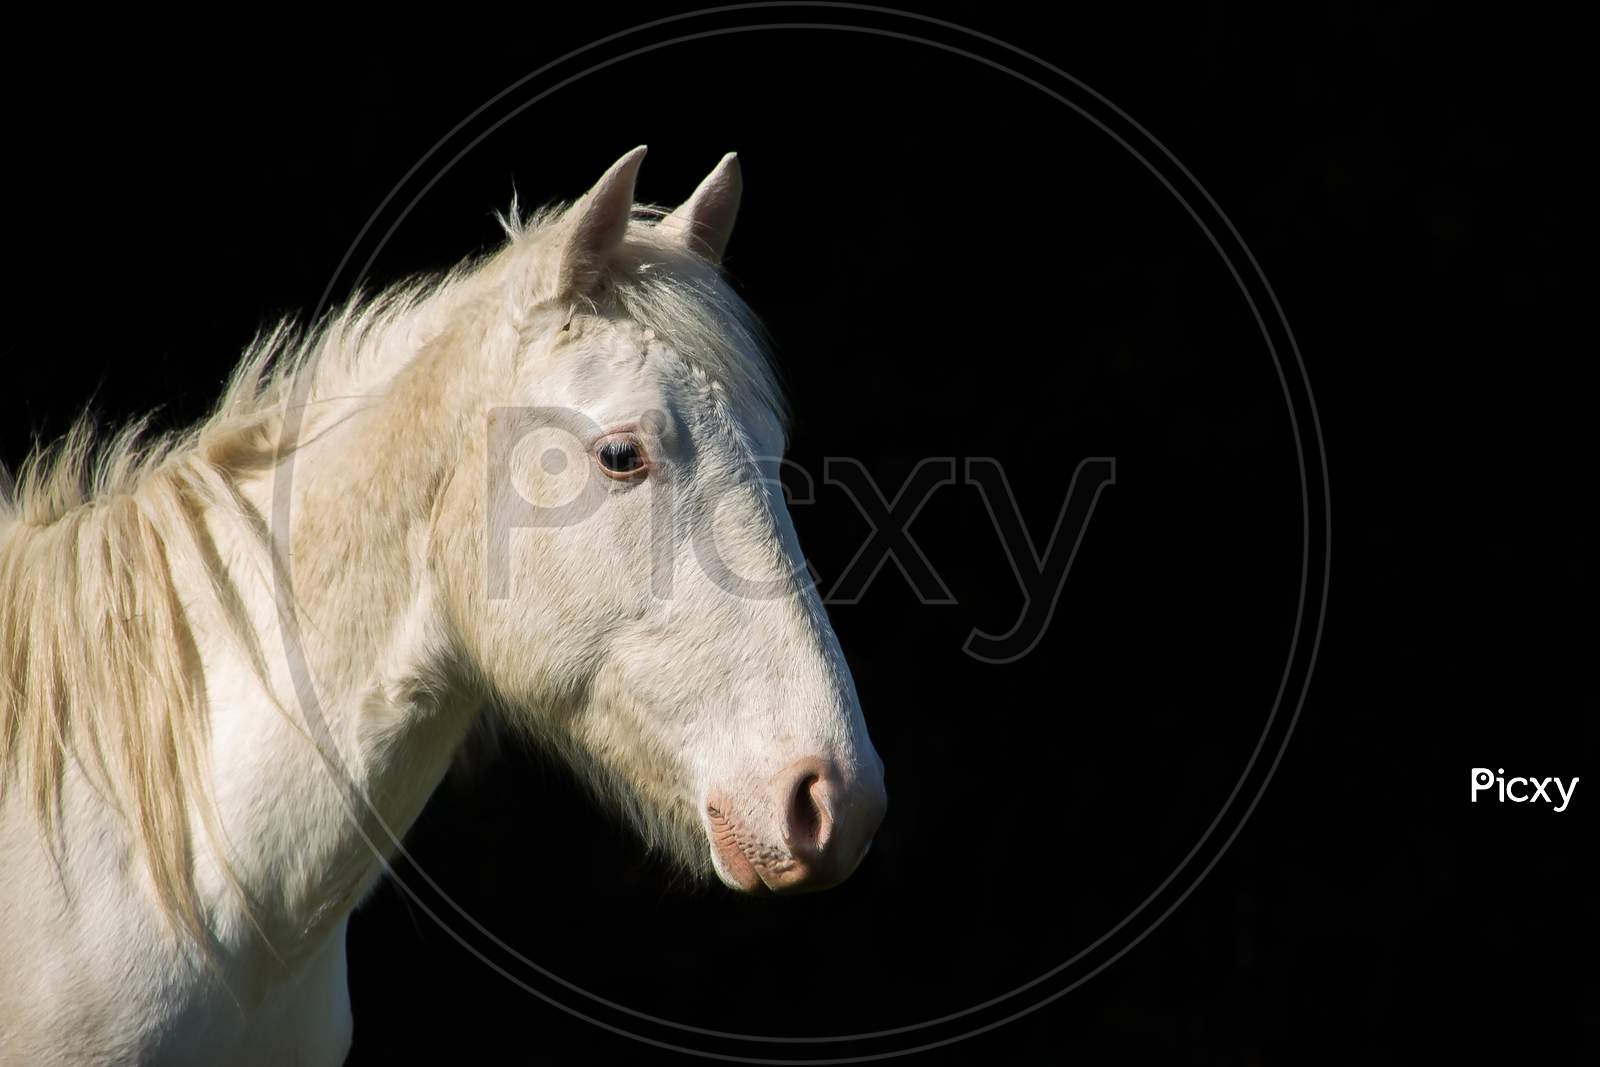 White Horse Portrait On Black Contrast Background